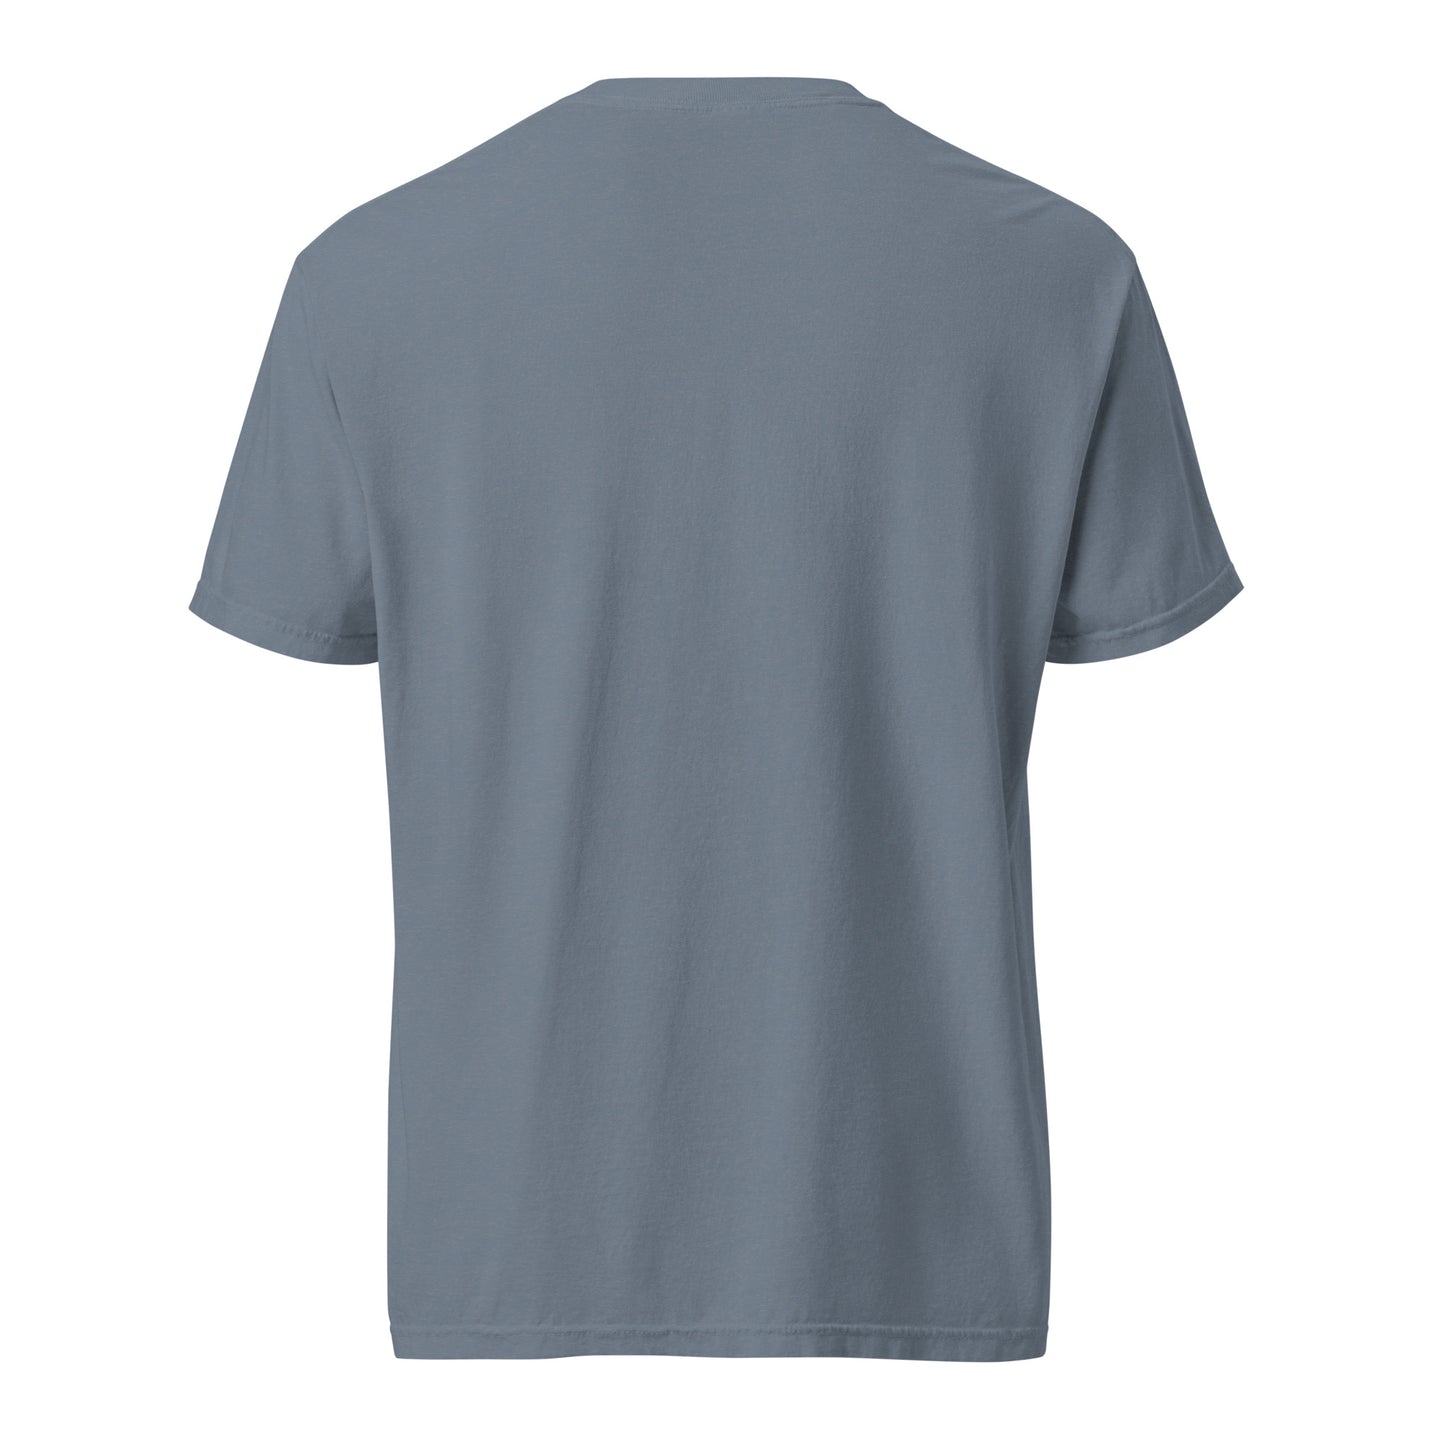 Adult - Comfort Colors unisex heavyweight t-shirt